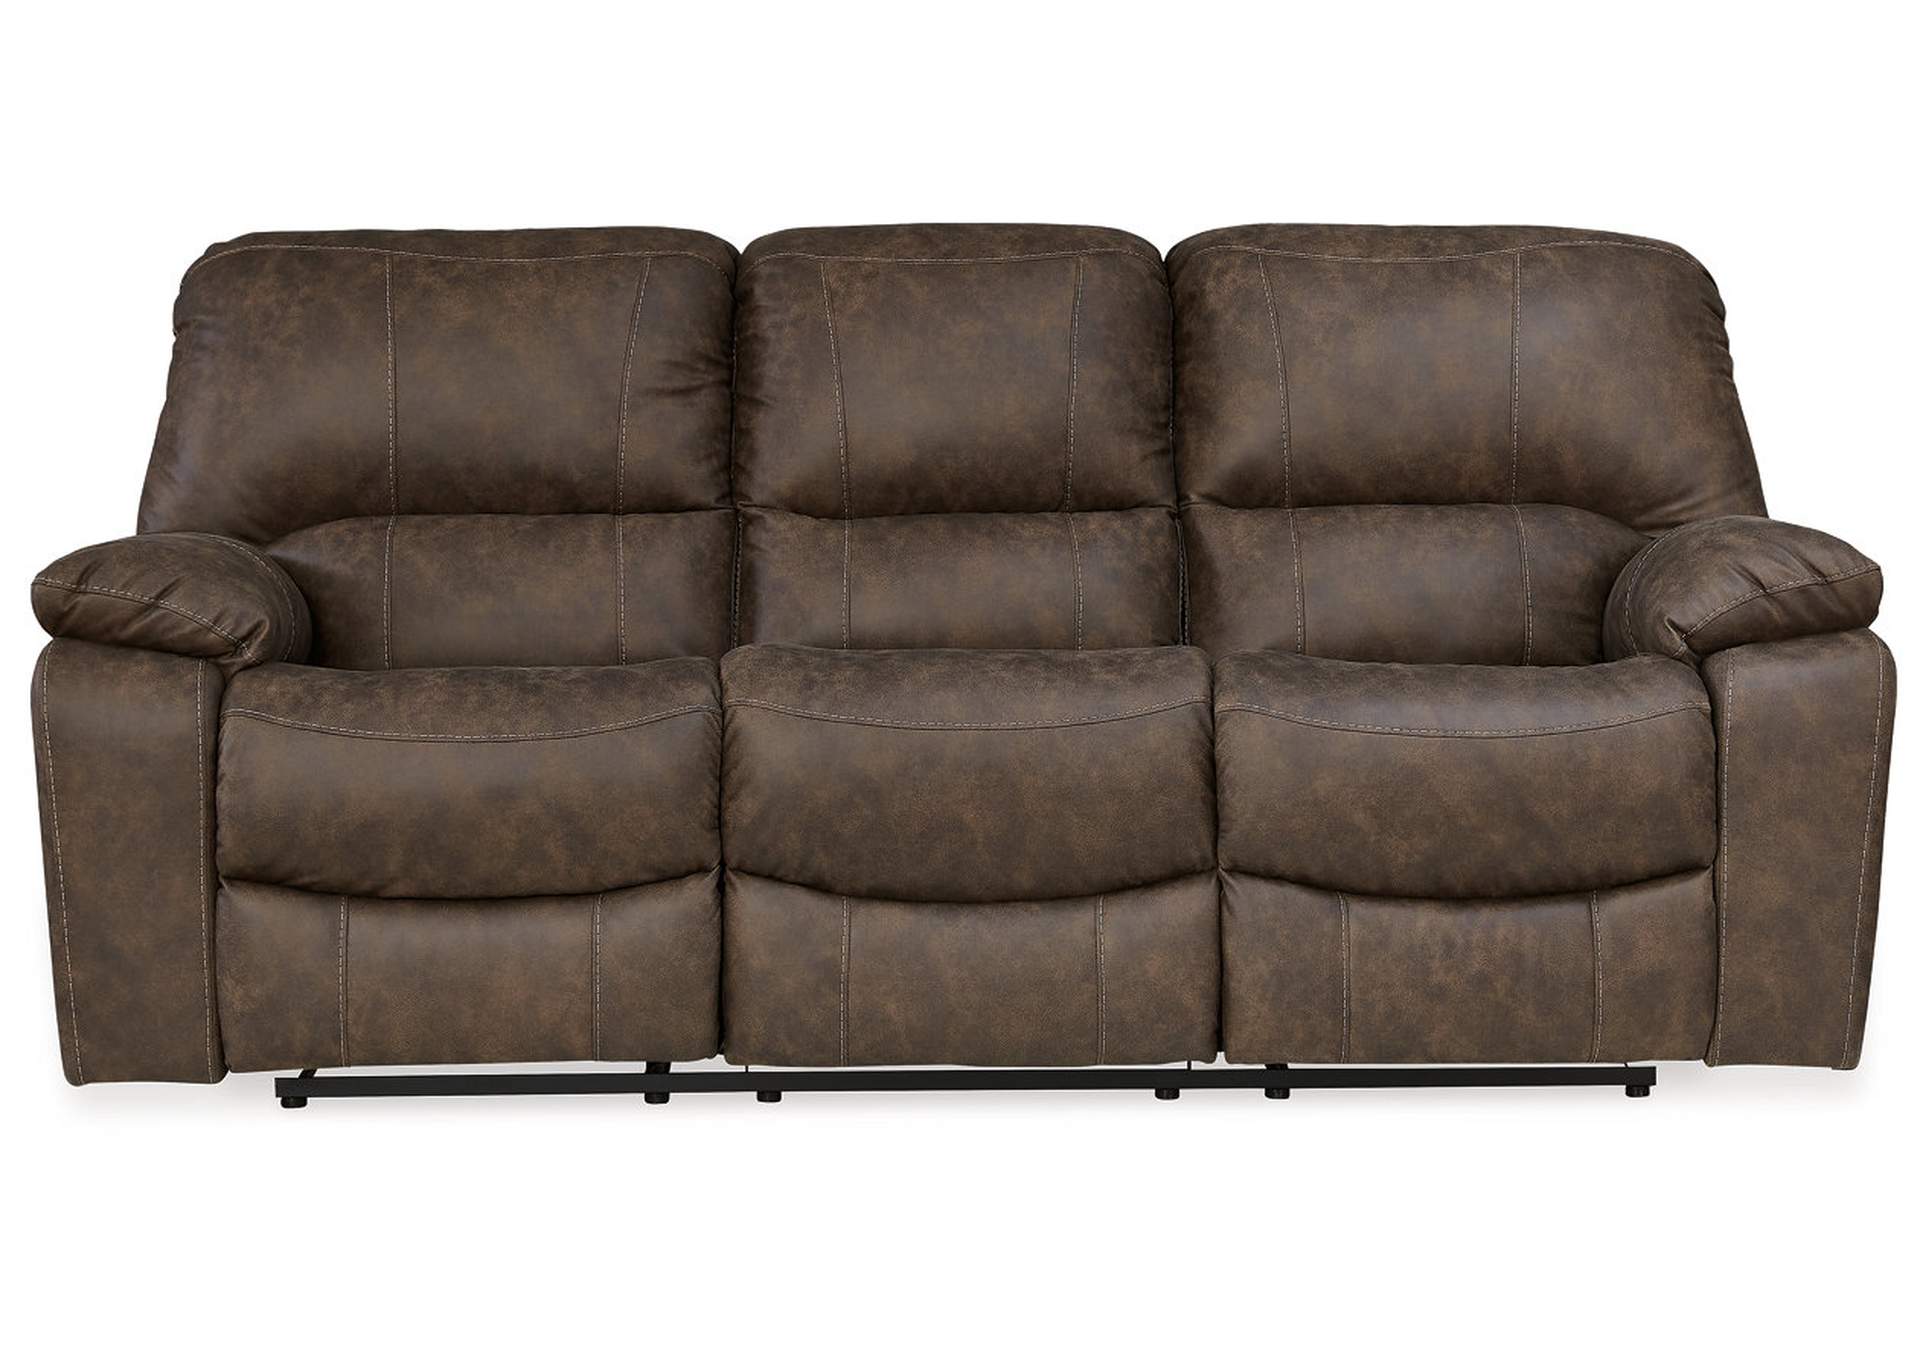 Kilmartin Reclining Sofa,Signature Design By Ashley